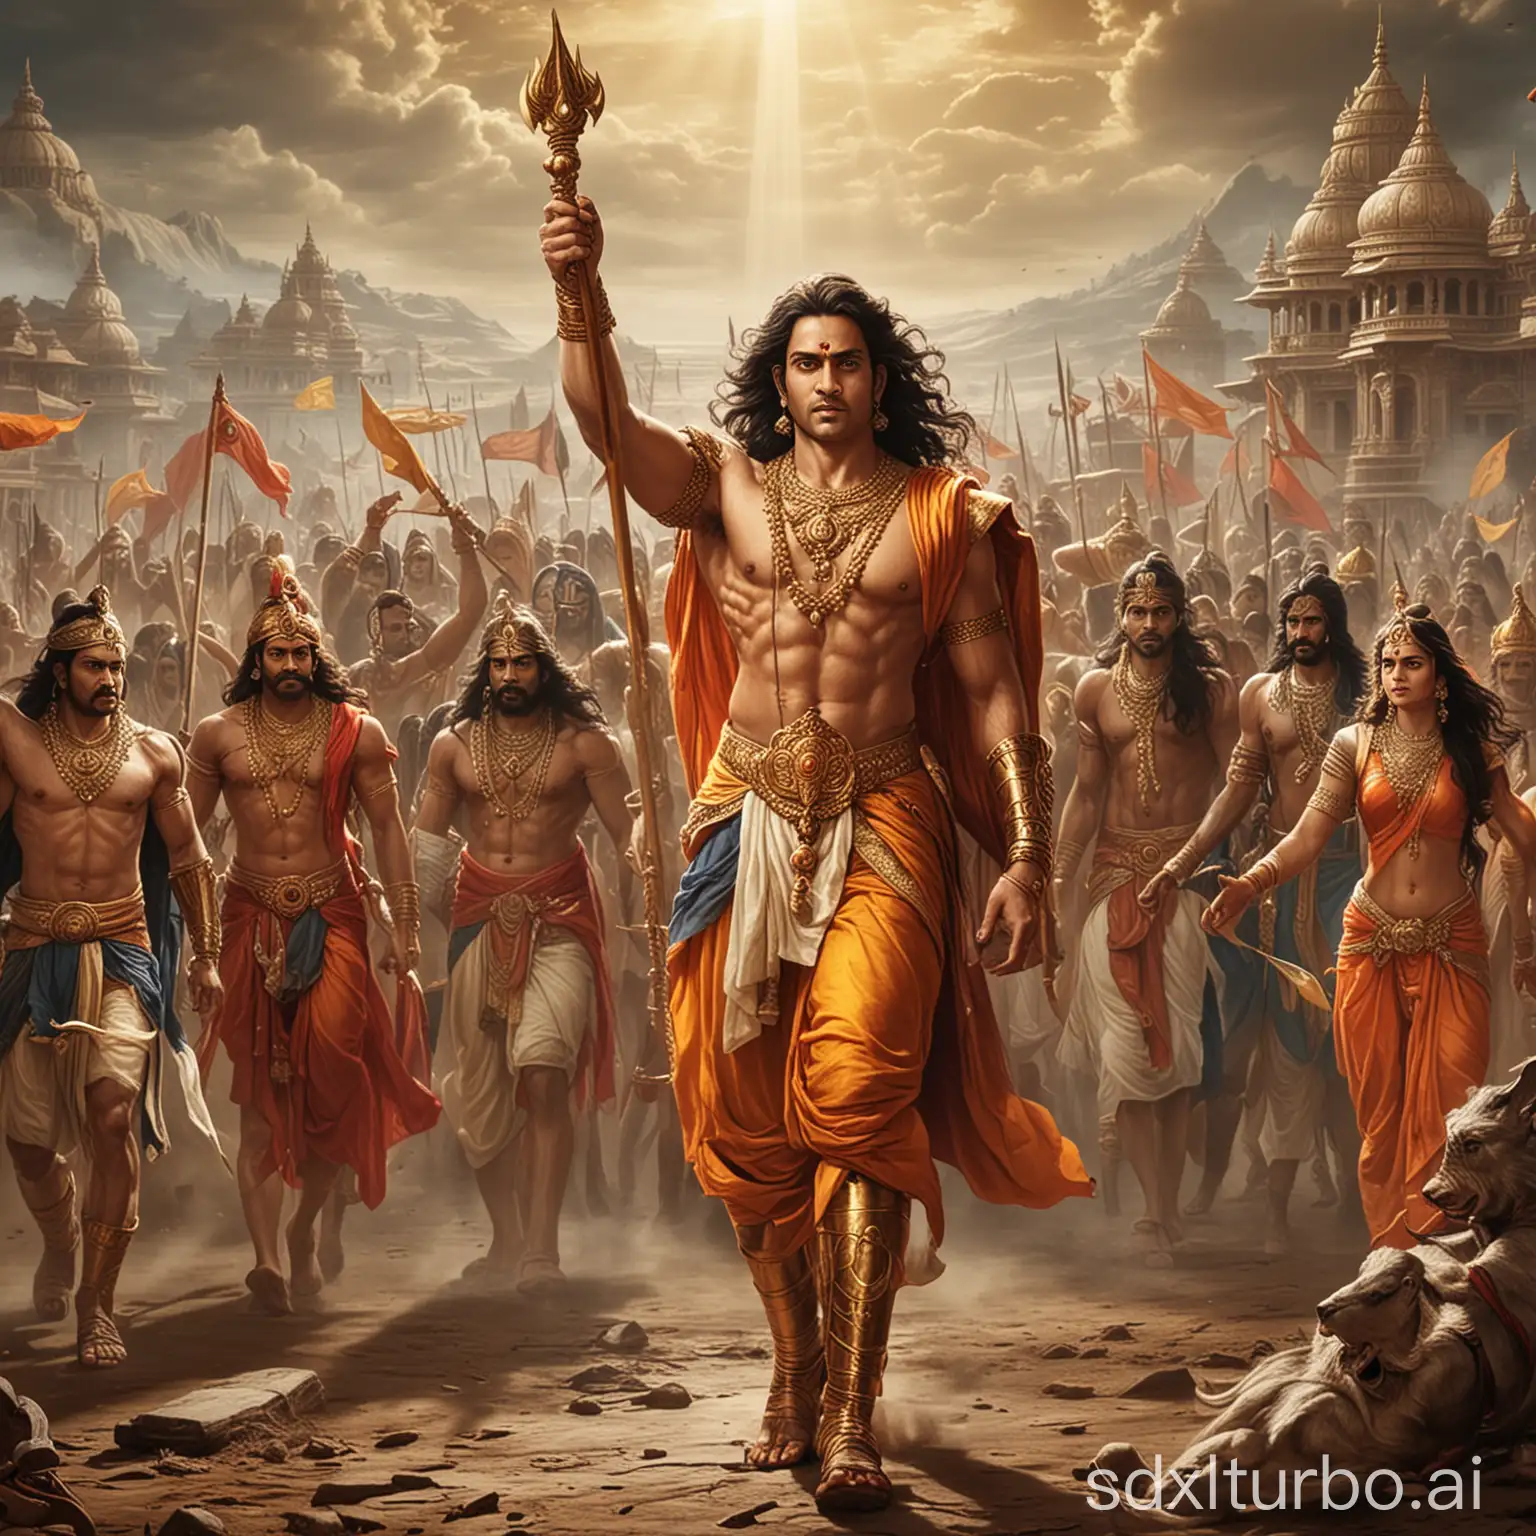 Epic-Battle-of-Mahabharata-Legendary-Warriors-Clash-in-a-Cosmic-War